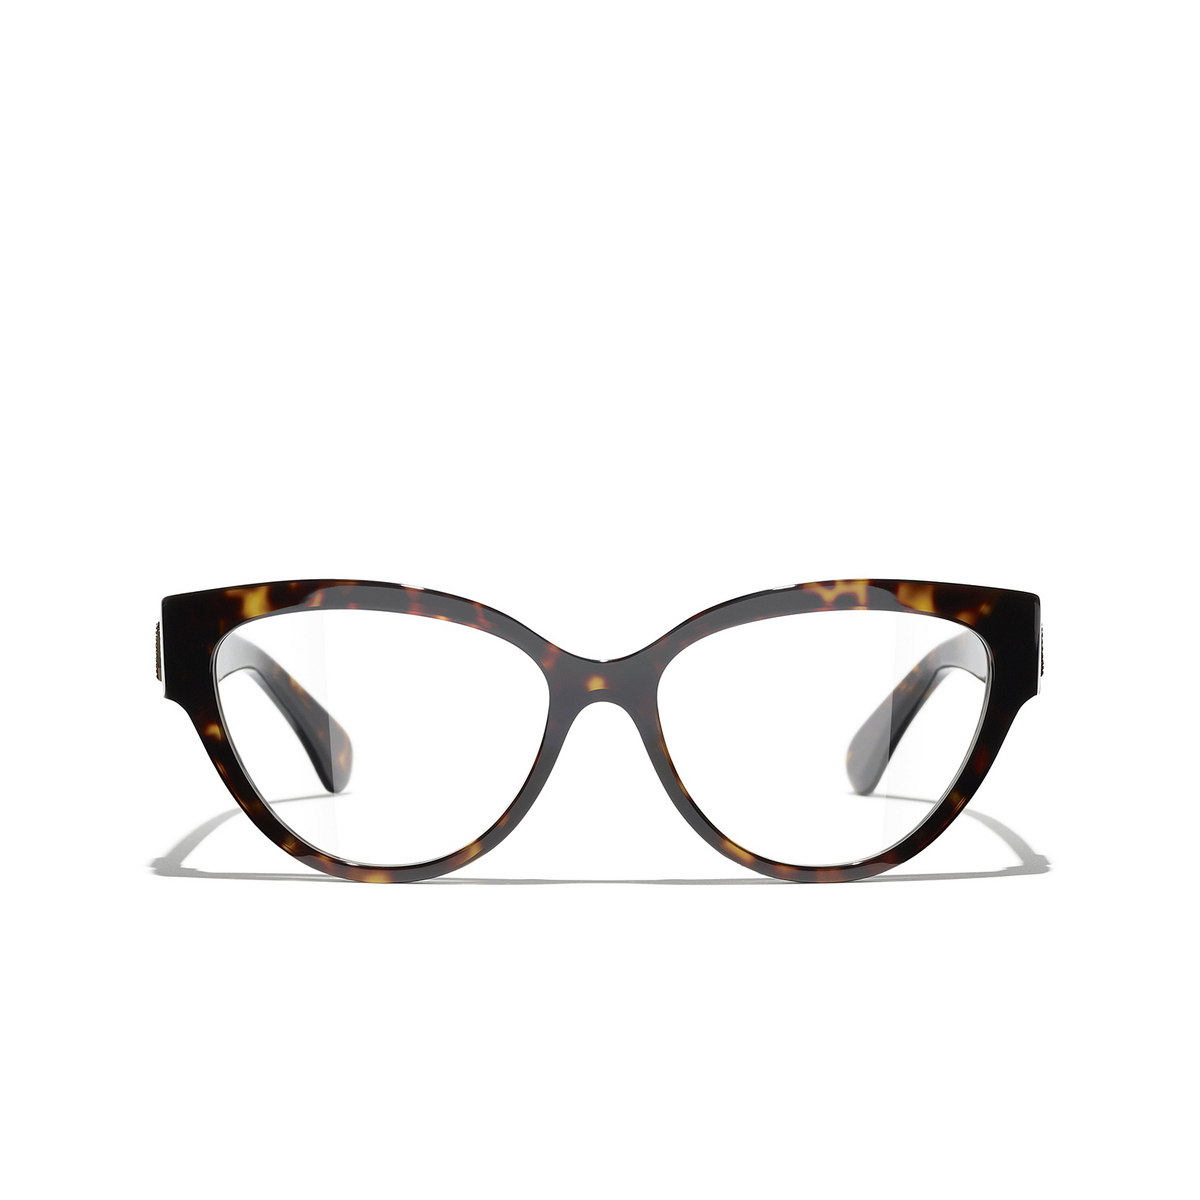 CHANEL cateye Eyeglasses C714 Dark Tortoise - front view